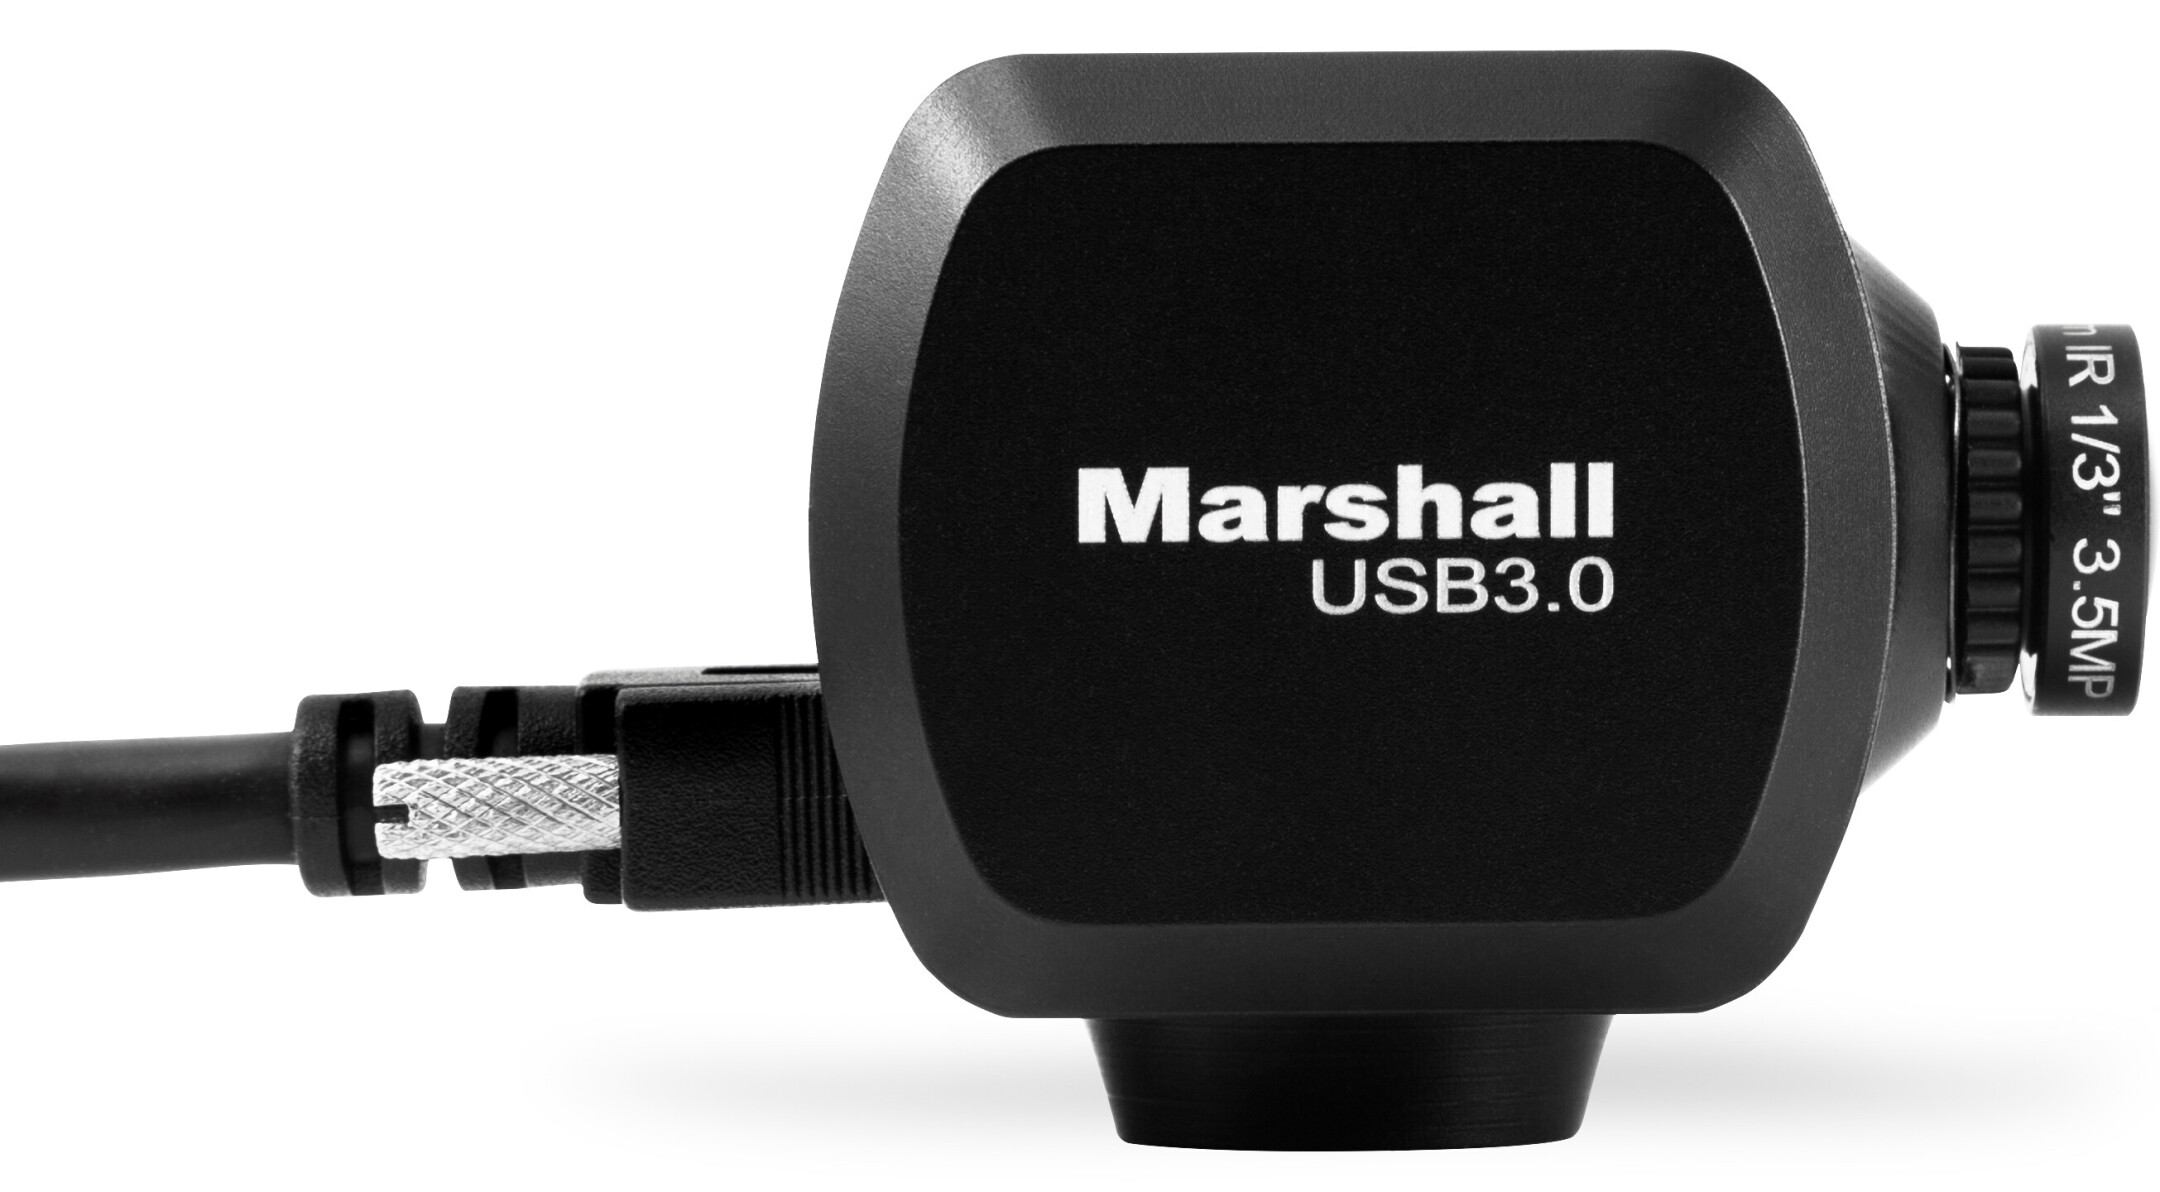 Marshall-Electronics-CV503-U3-Full-HD-Mini-Camera